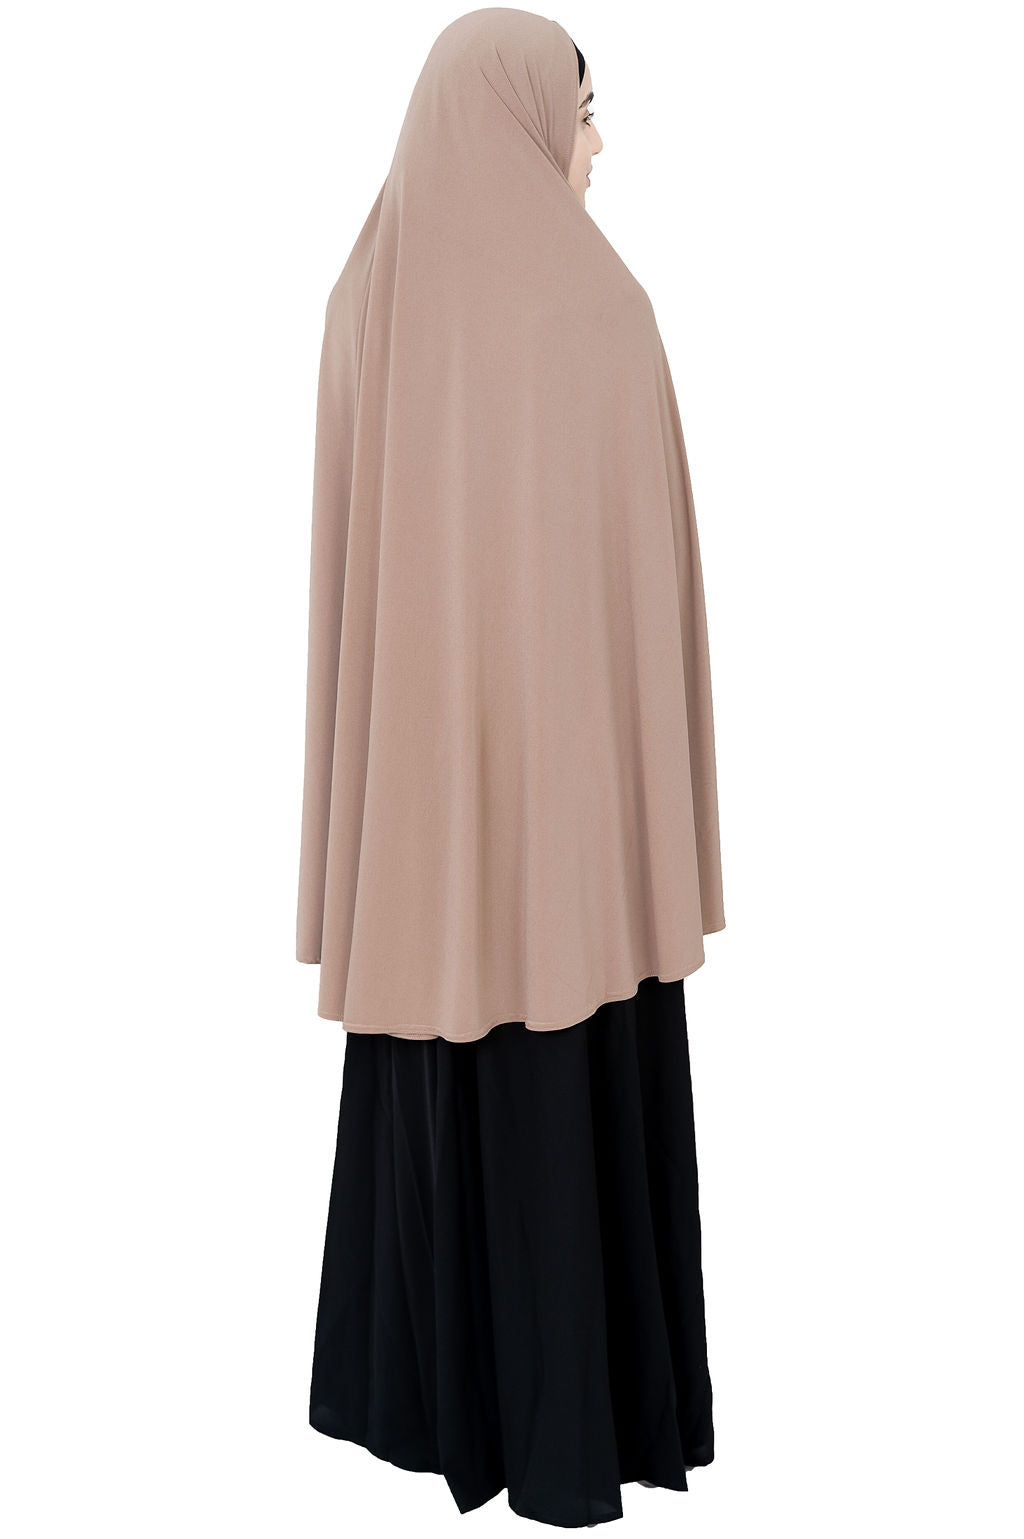 Standard Jersey Jelbab in Blush - Behind The Veil